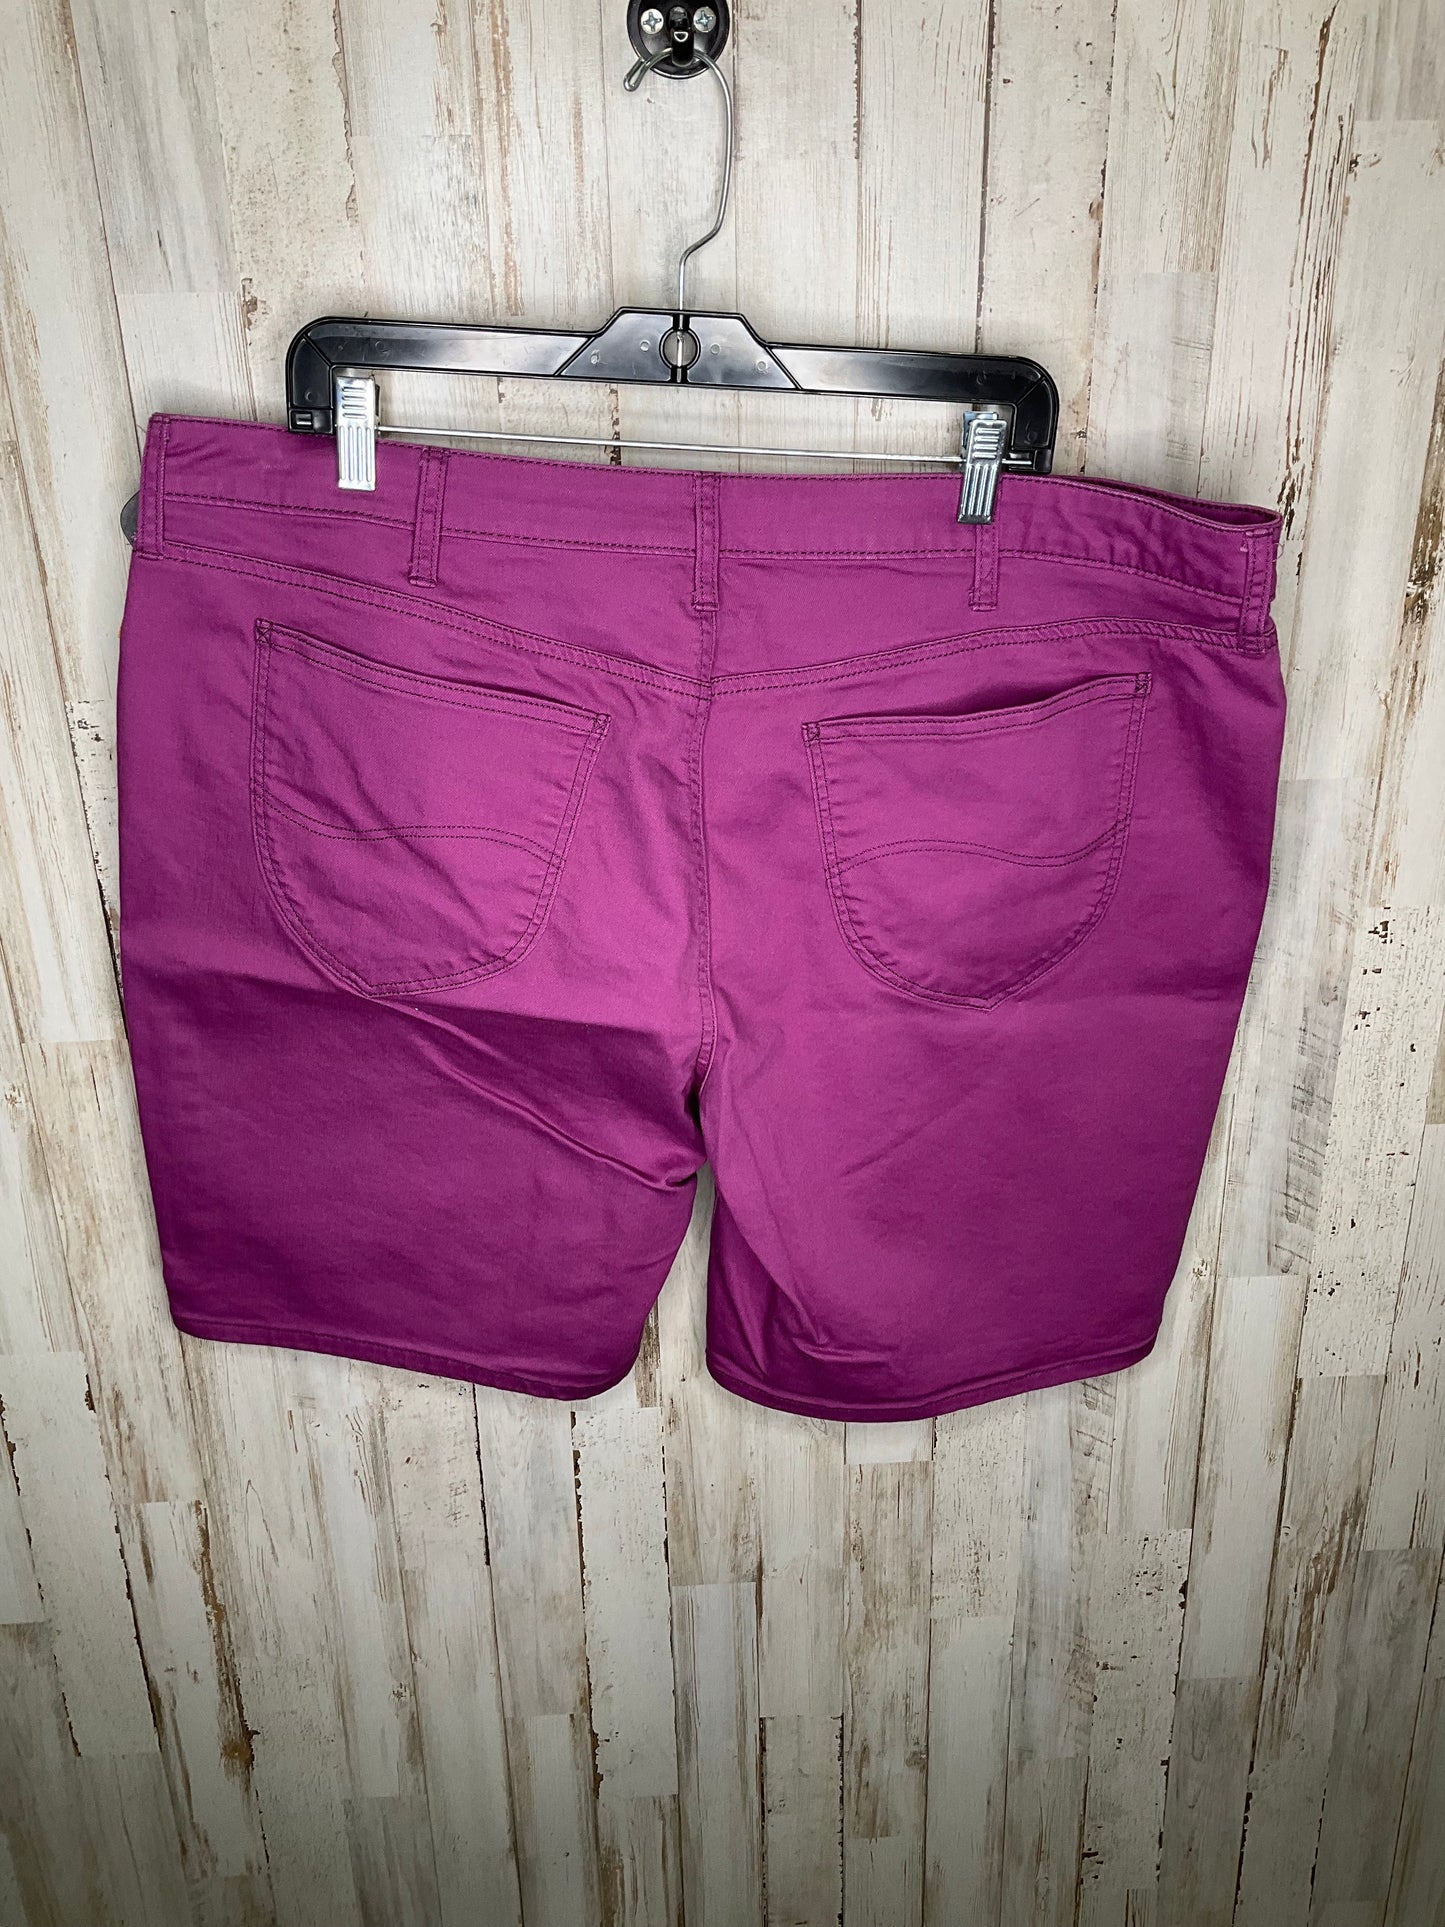 Purple Shorts Lee, Size 22